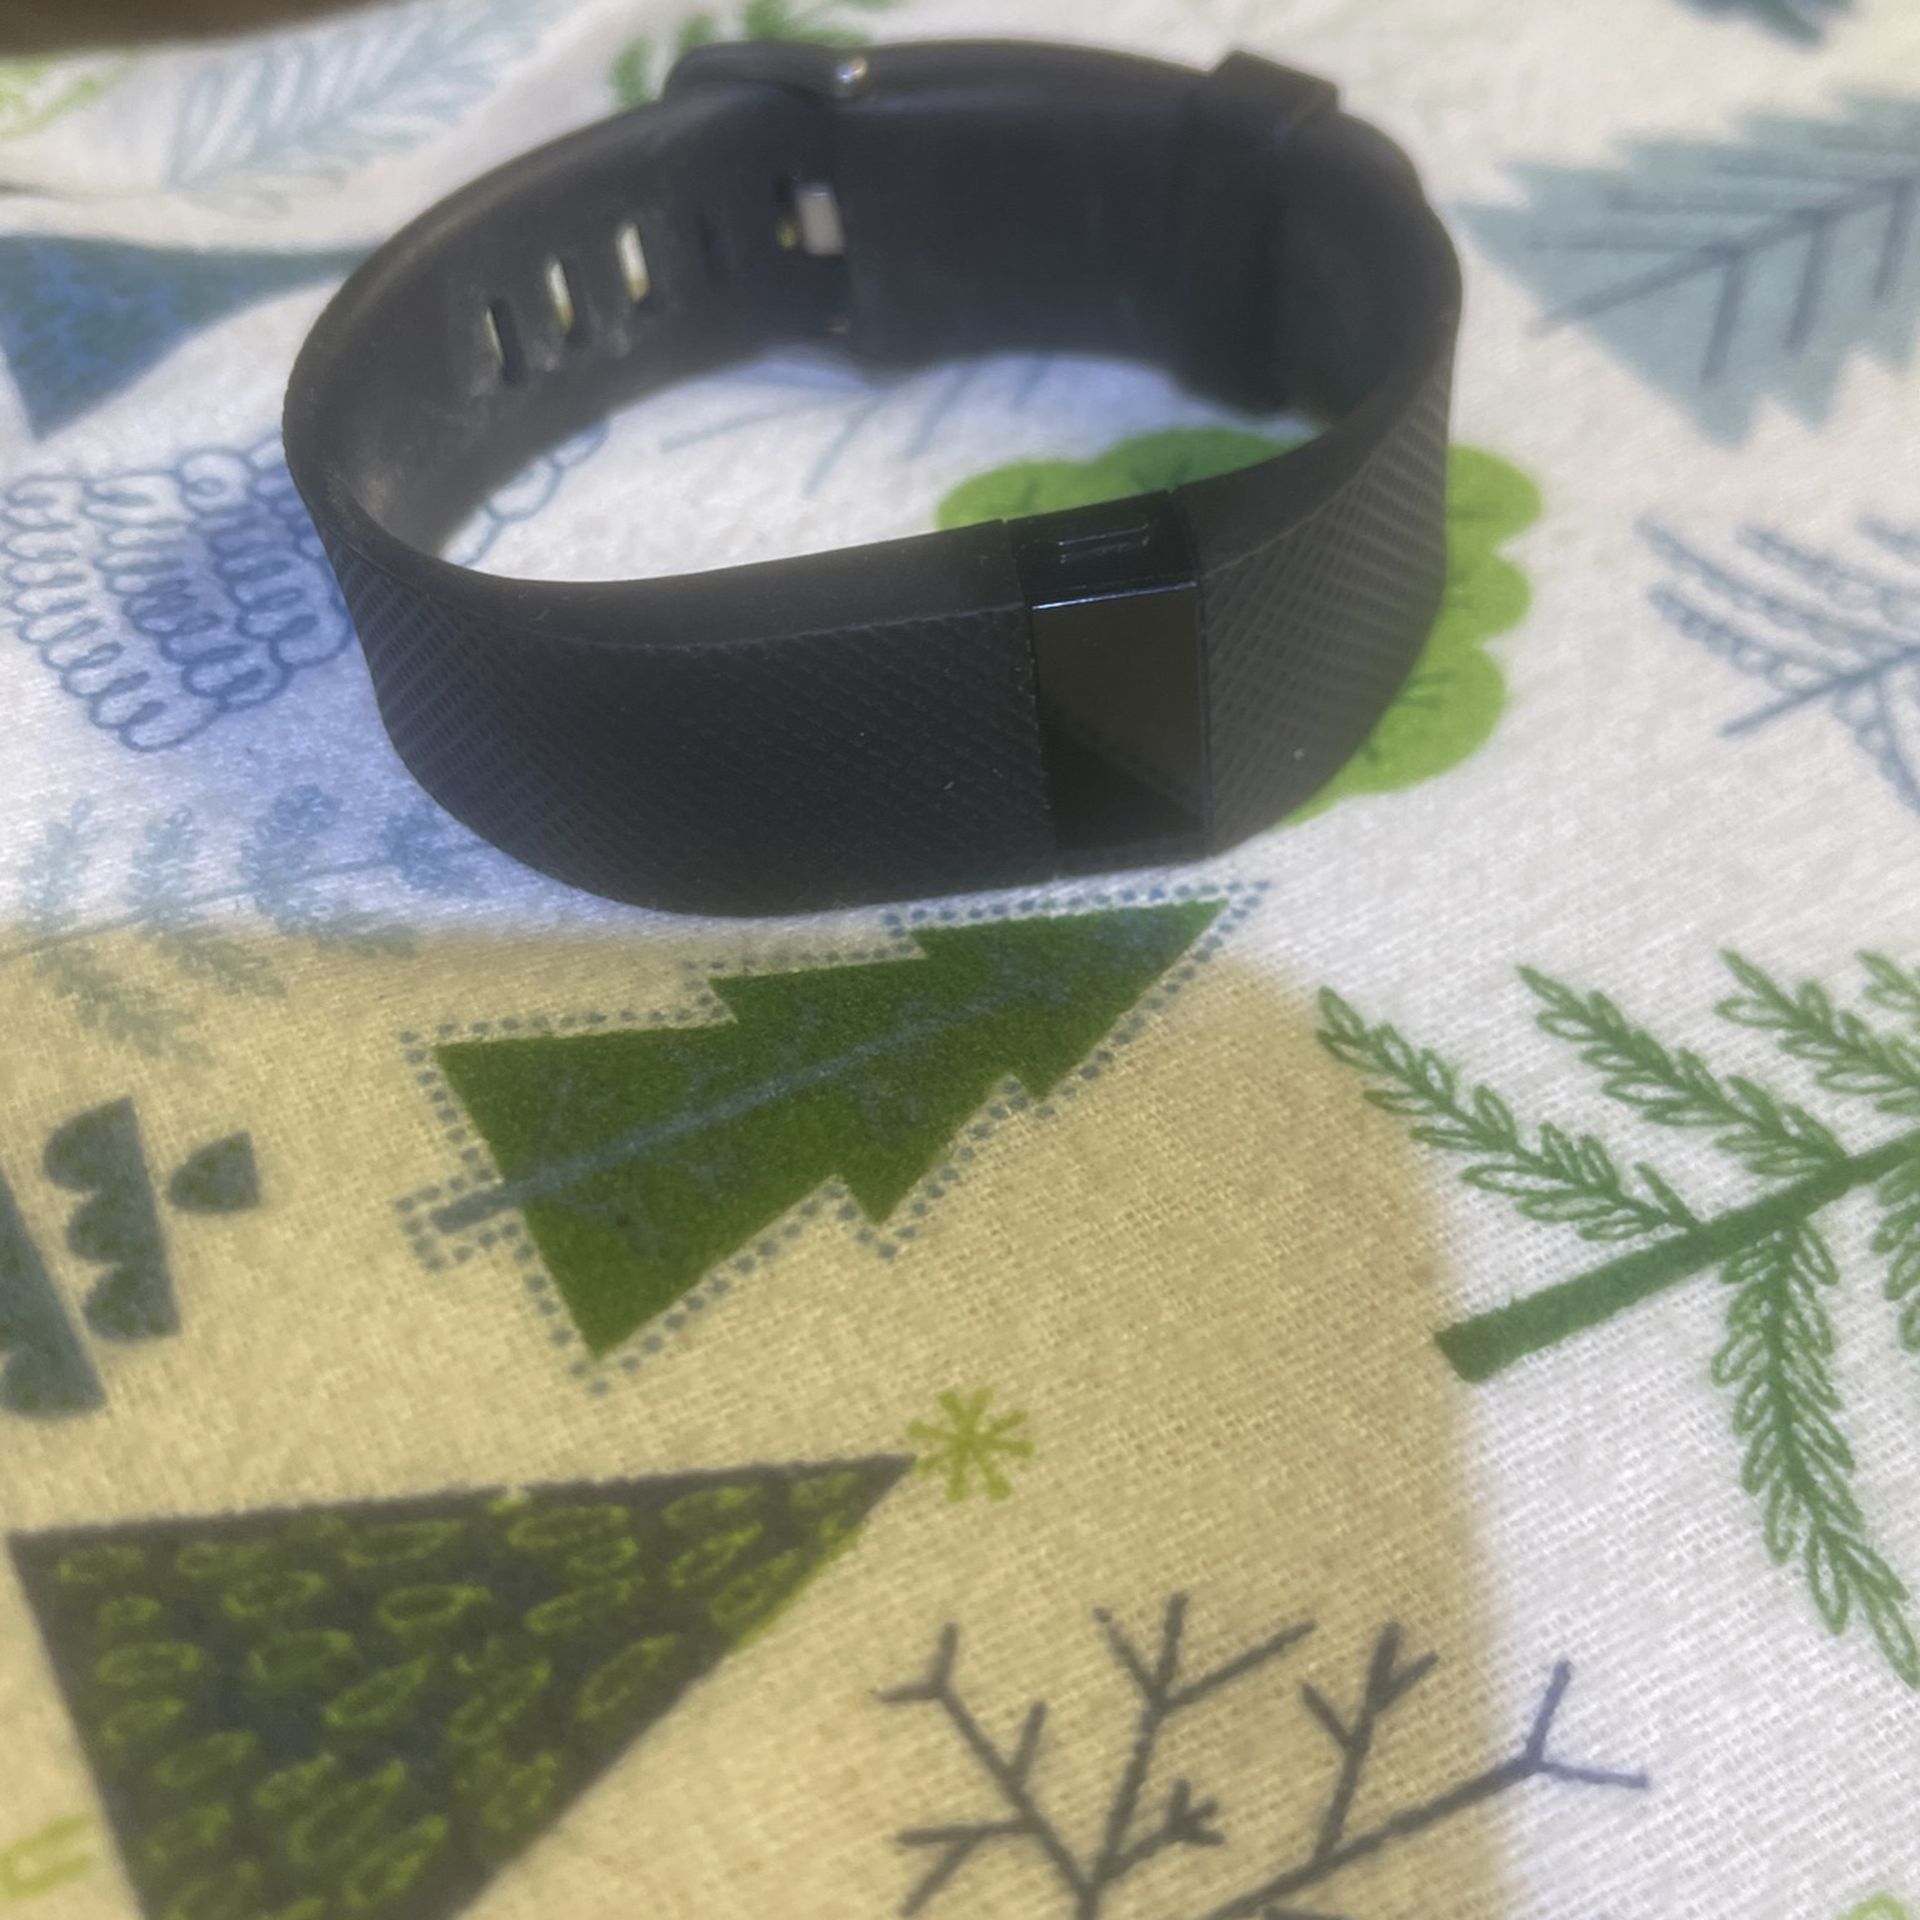 Fitbit Flex Watch Only Works 